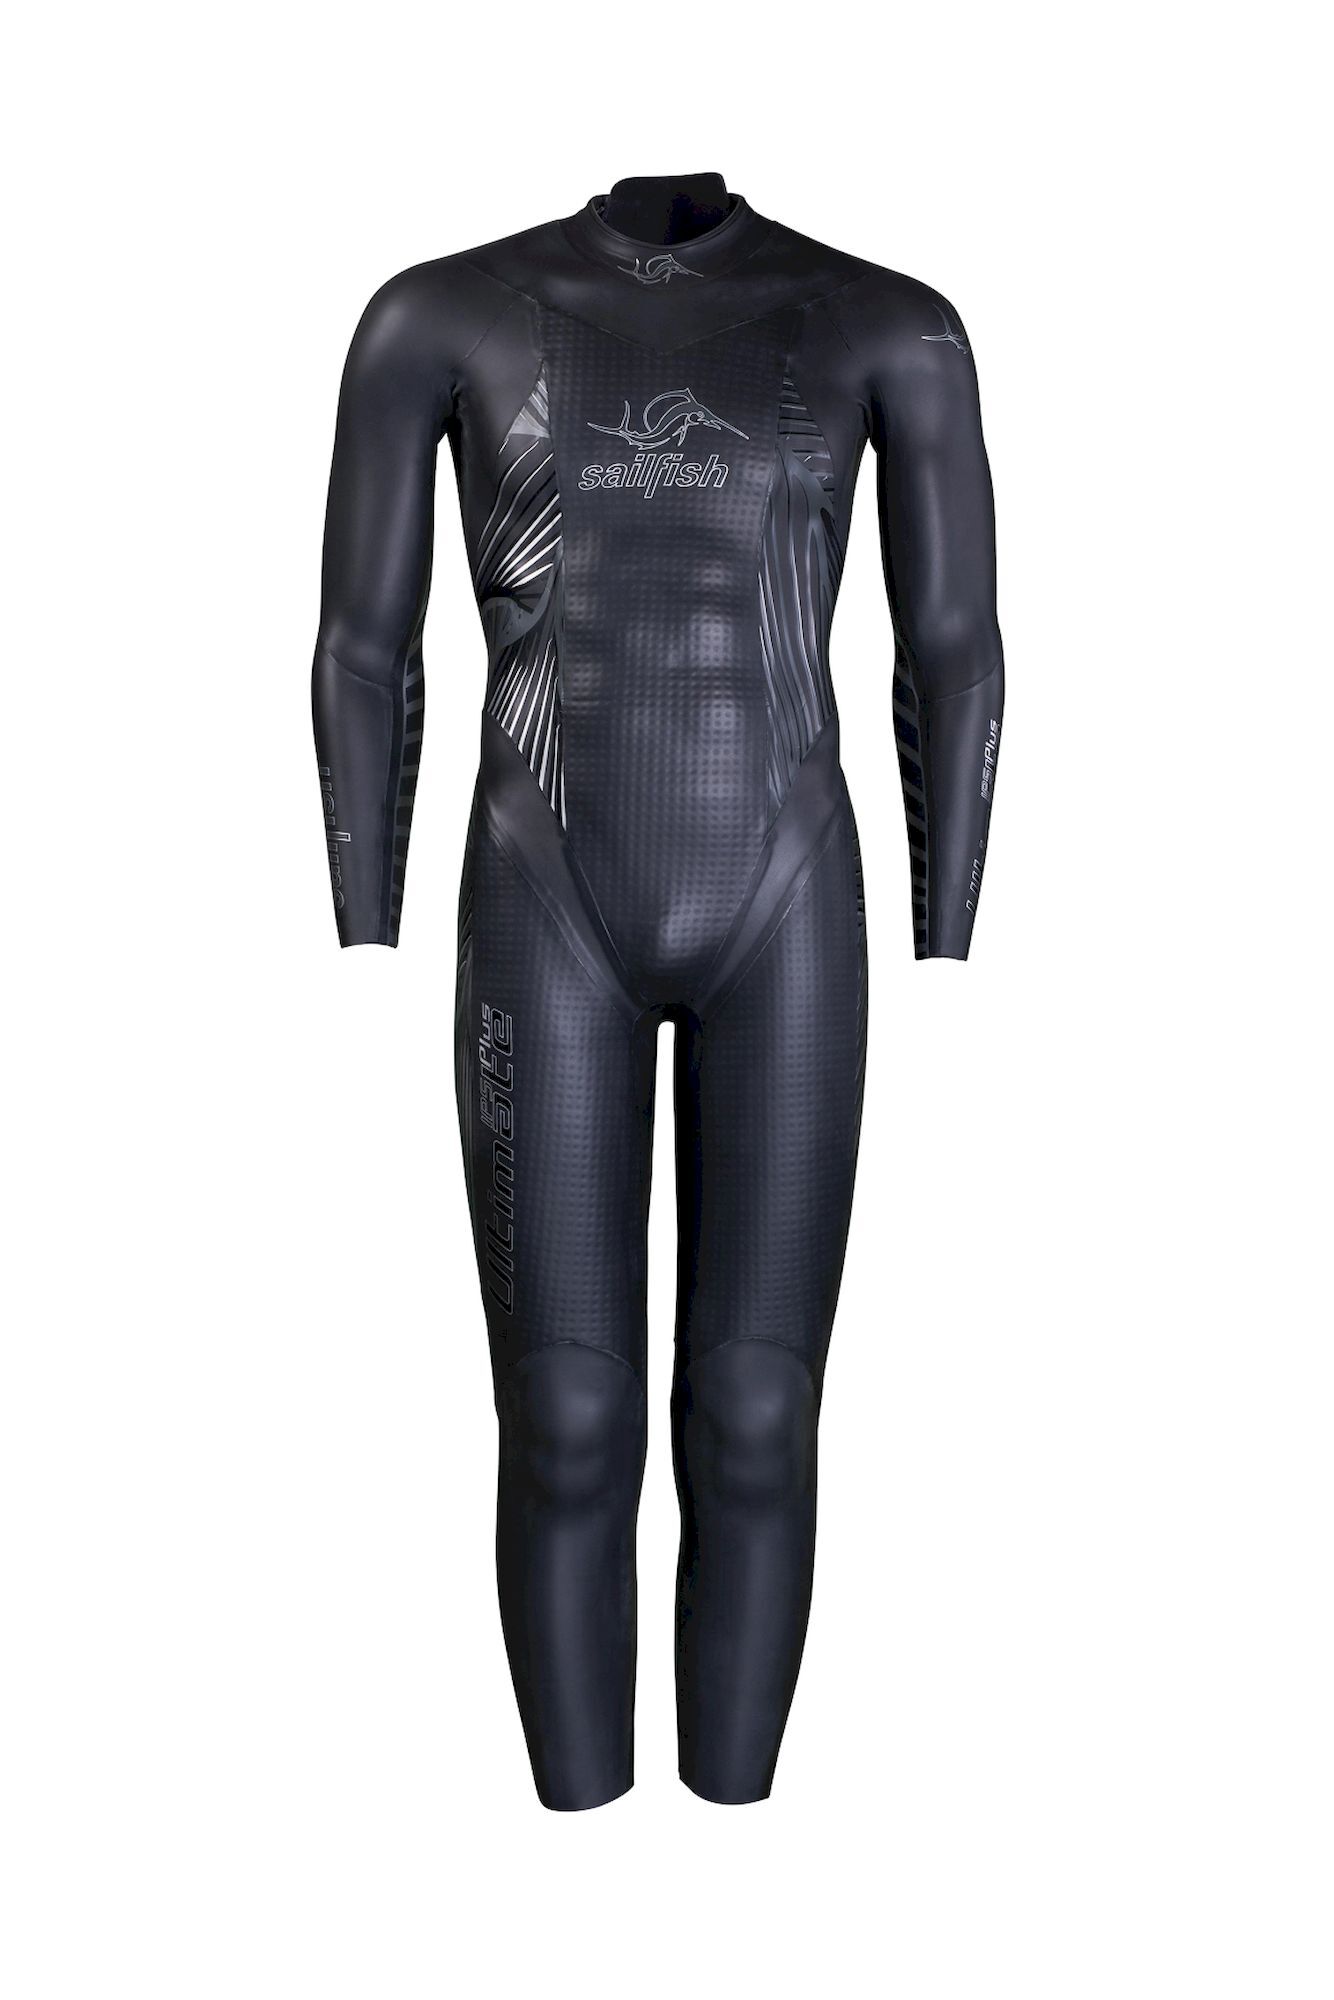 Sailfish Wetsuit Mens Ultimate IPS Plus 3 - Trajes de neopreno - Hombre